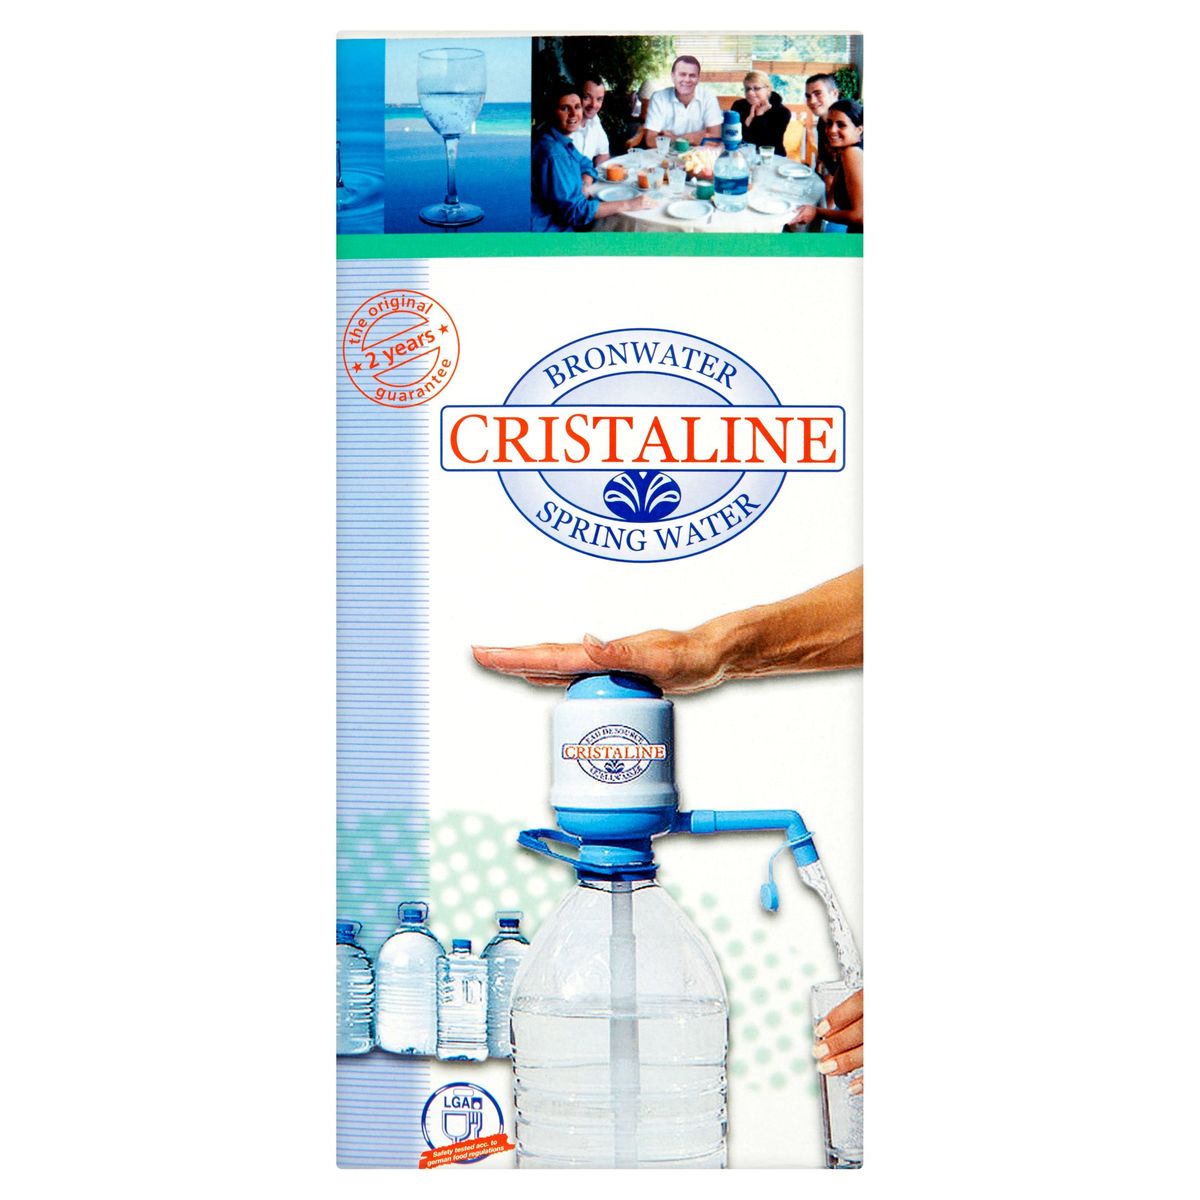 Cristaline Spring Water